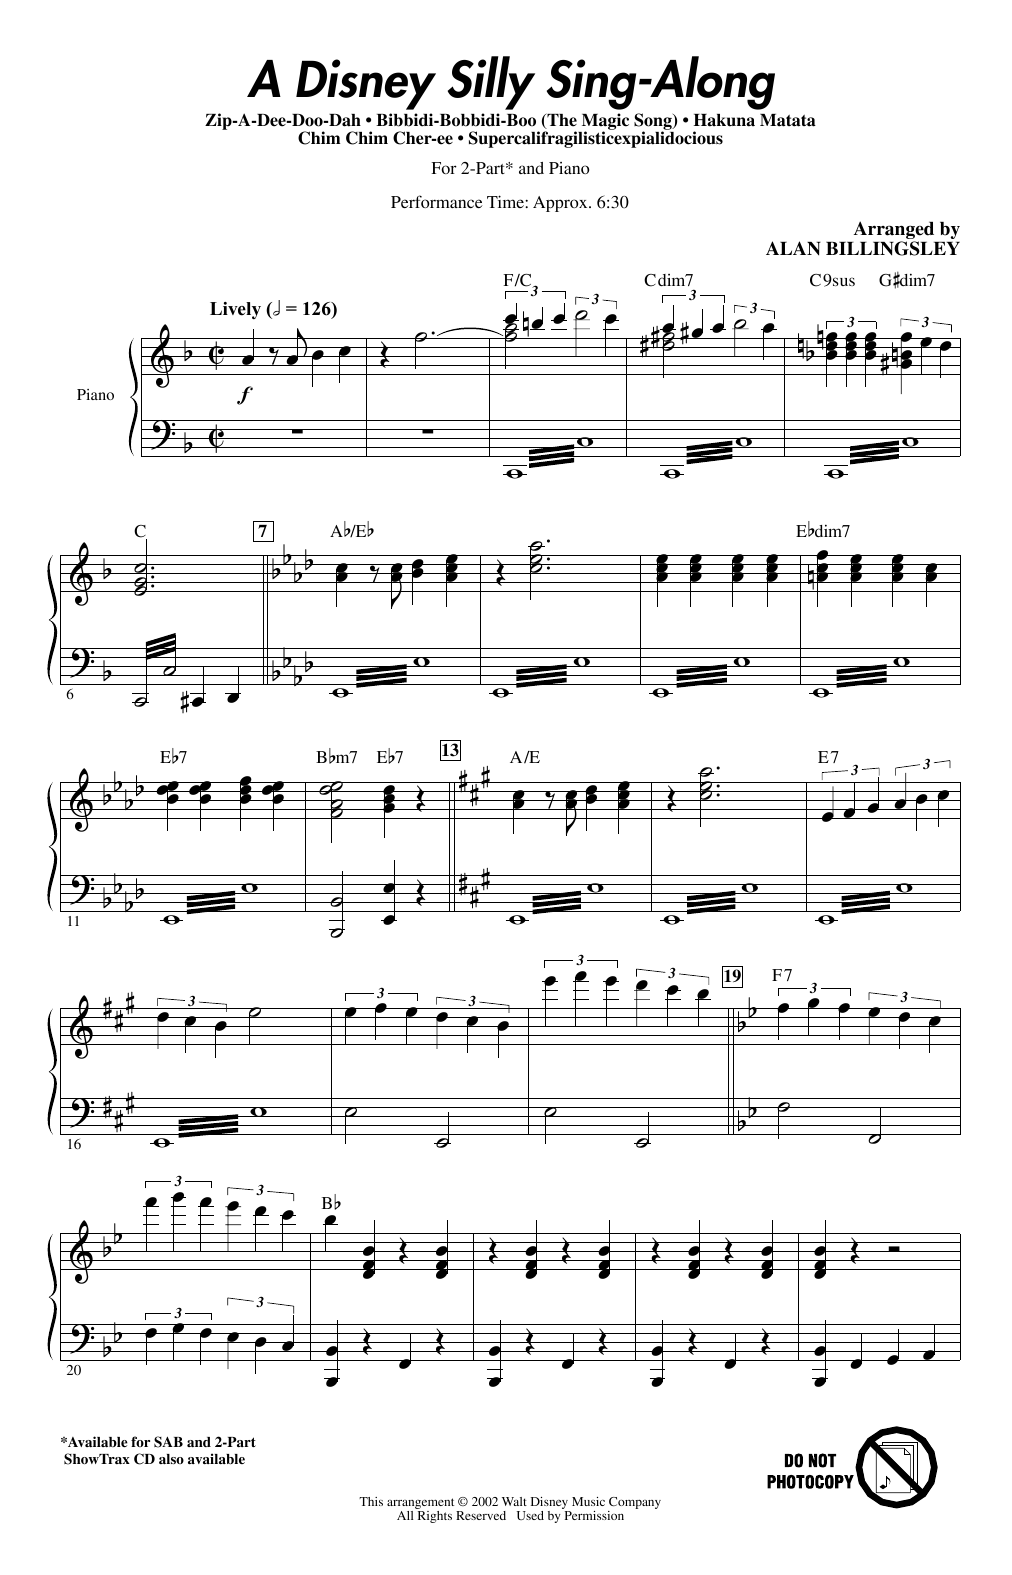 Alan Billingsley A Disney Silly Sing-Along Sheet Music Notes & Chords for SAB Choir - Download or Print PDF